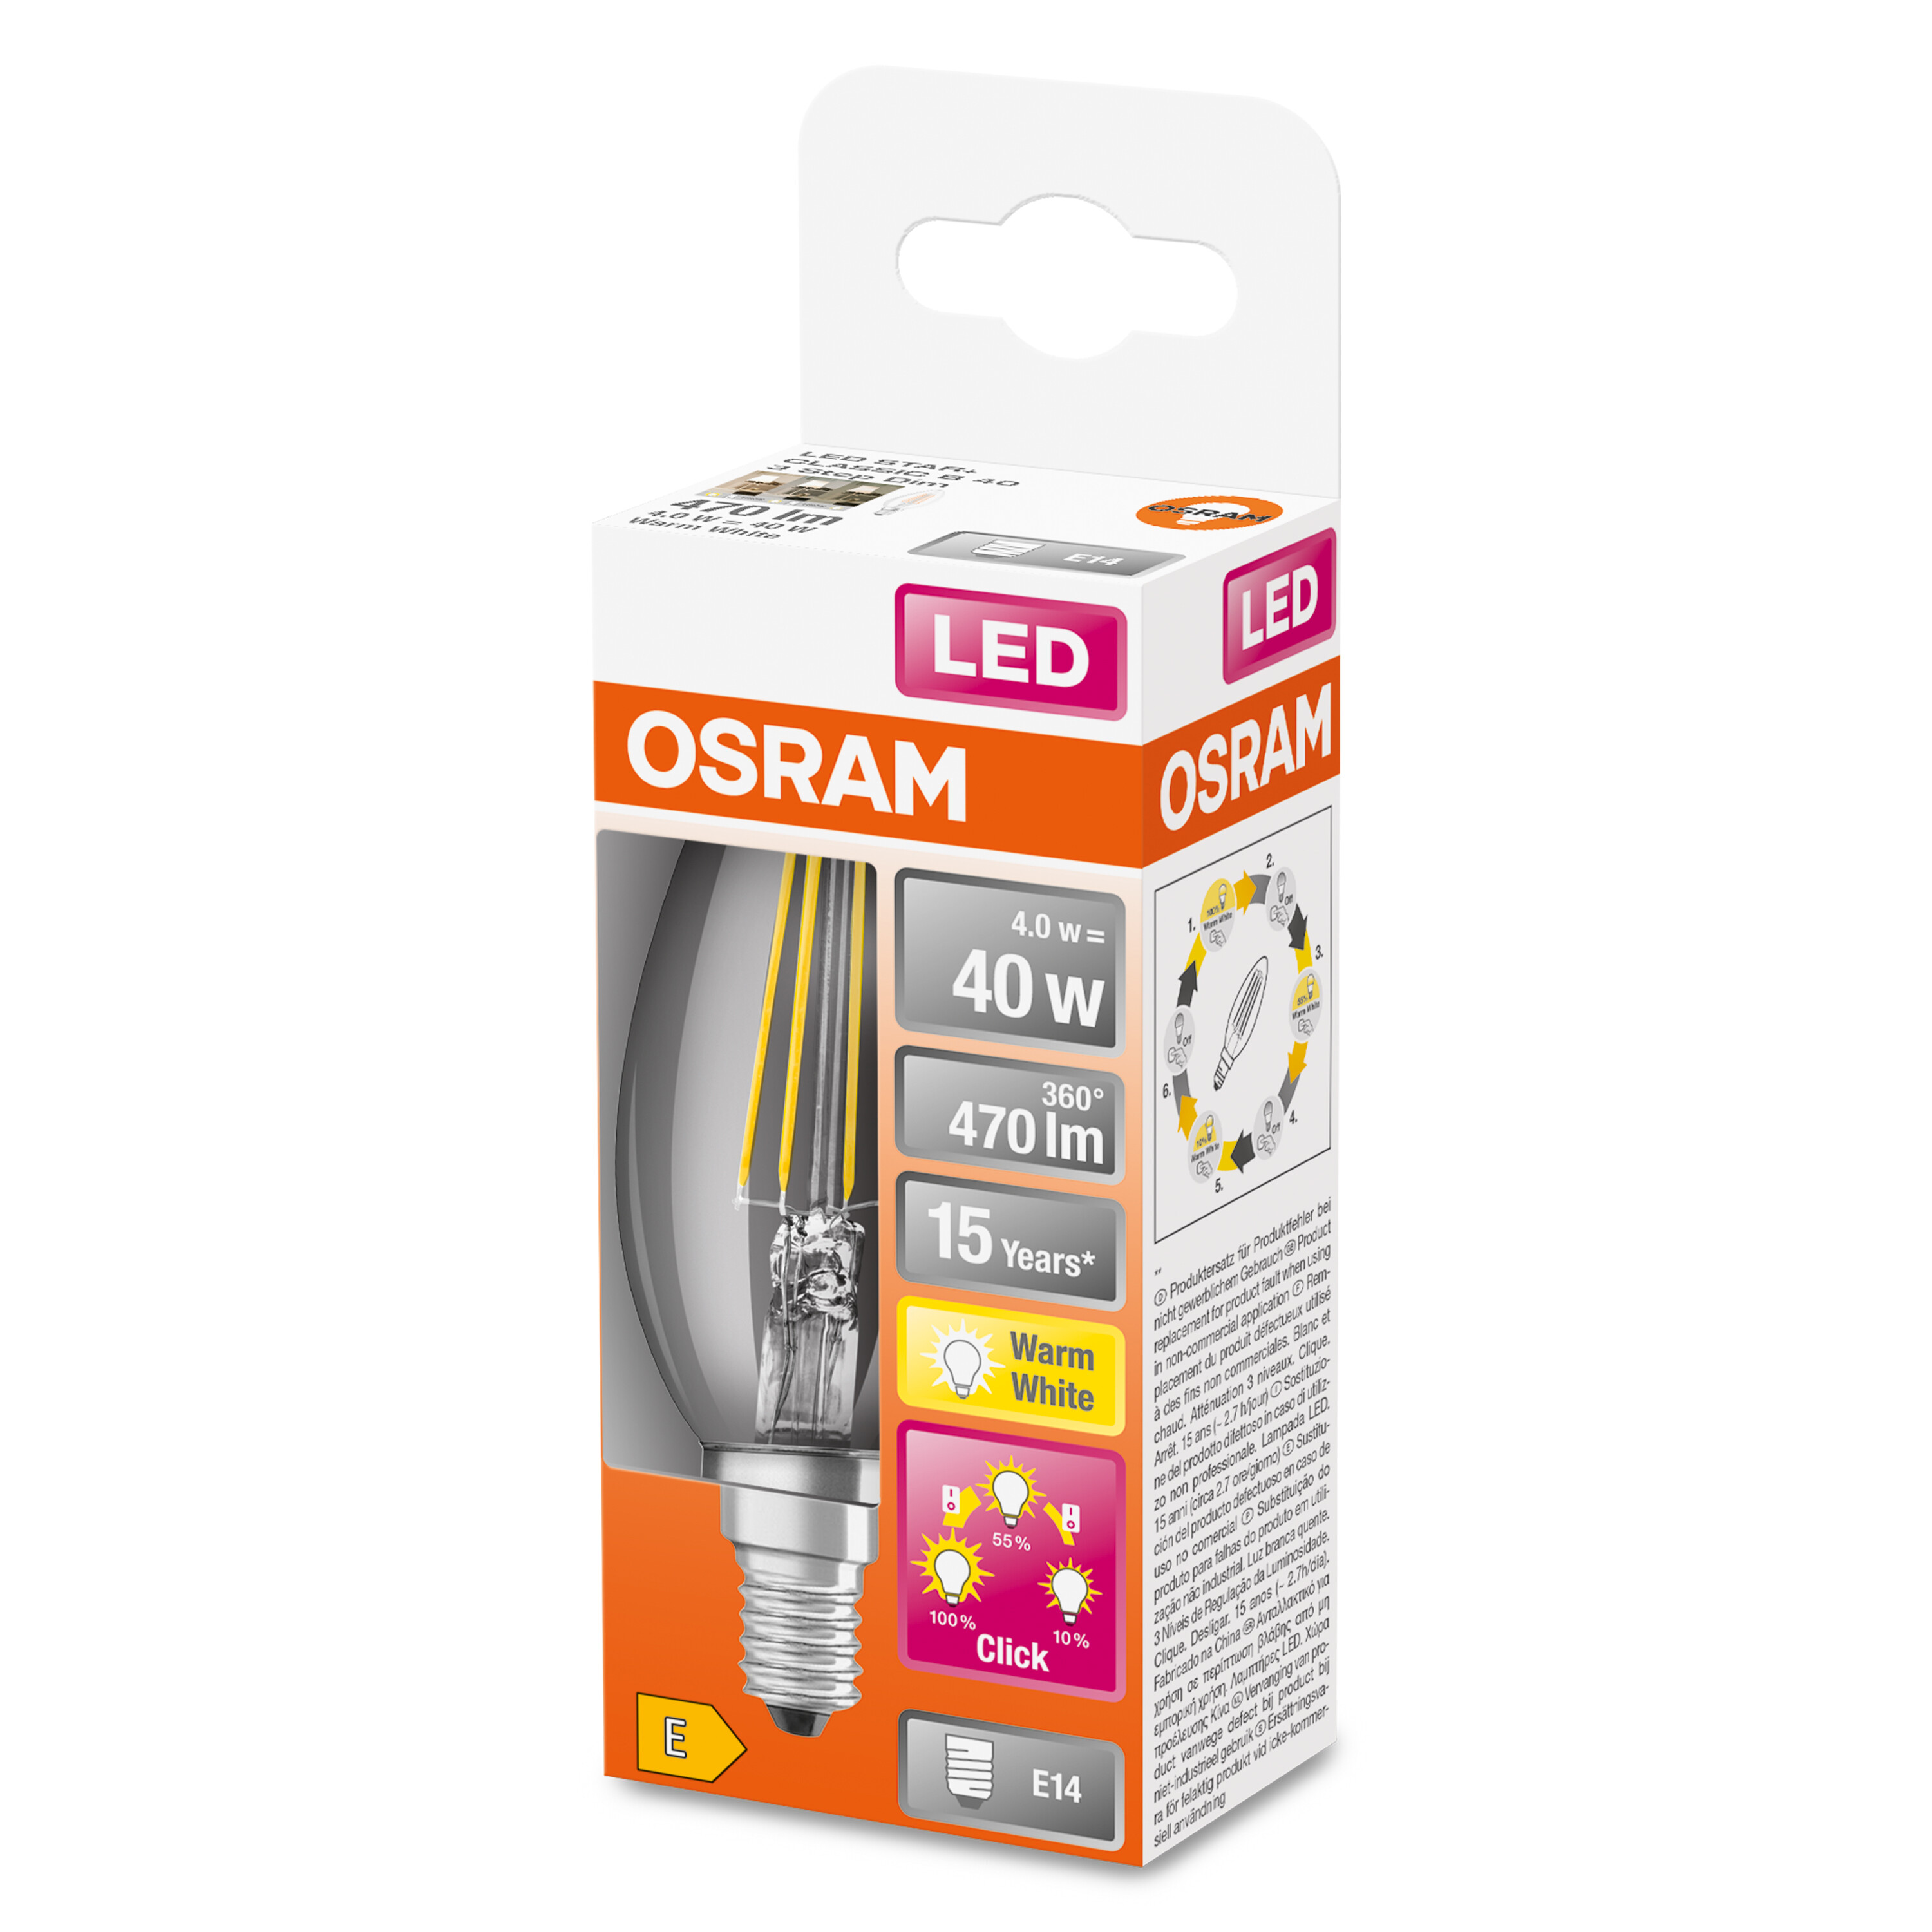 OSRAM  LED THREE CLASSIC 470 Lumen Warmweiß B LED Lampe DIM STEP